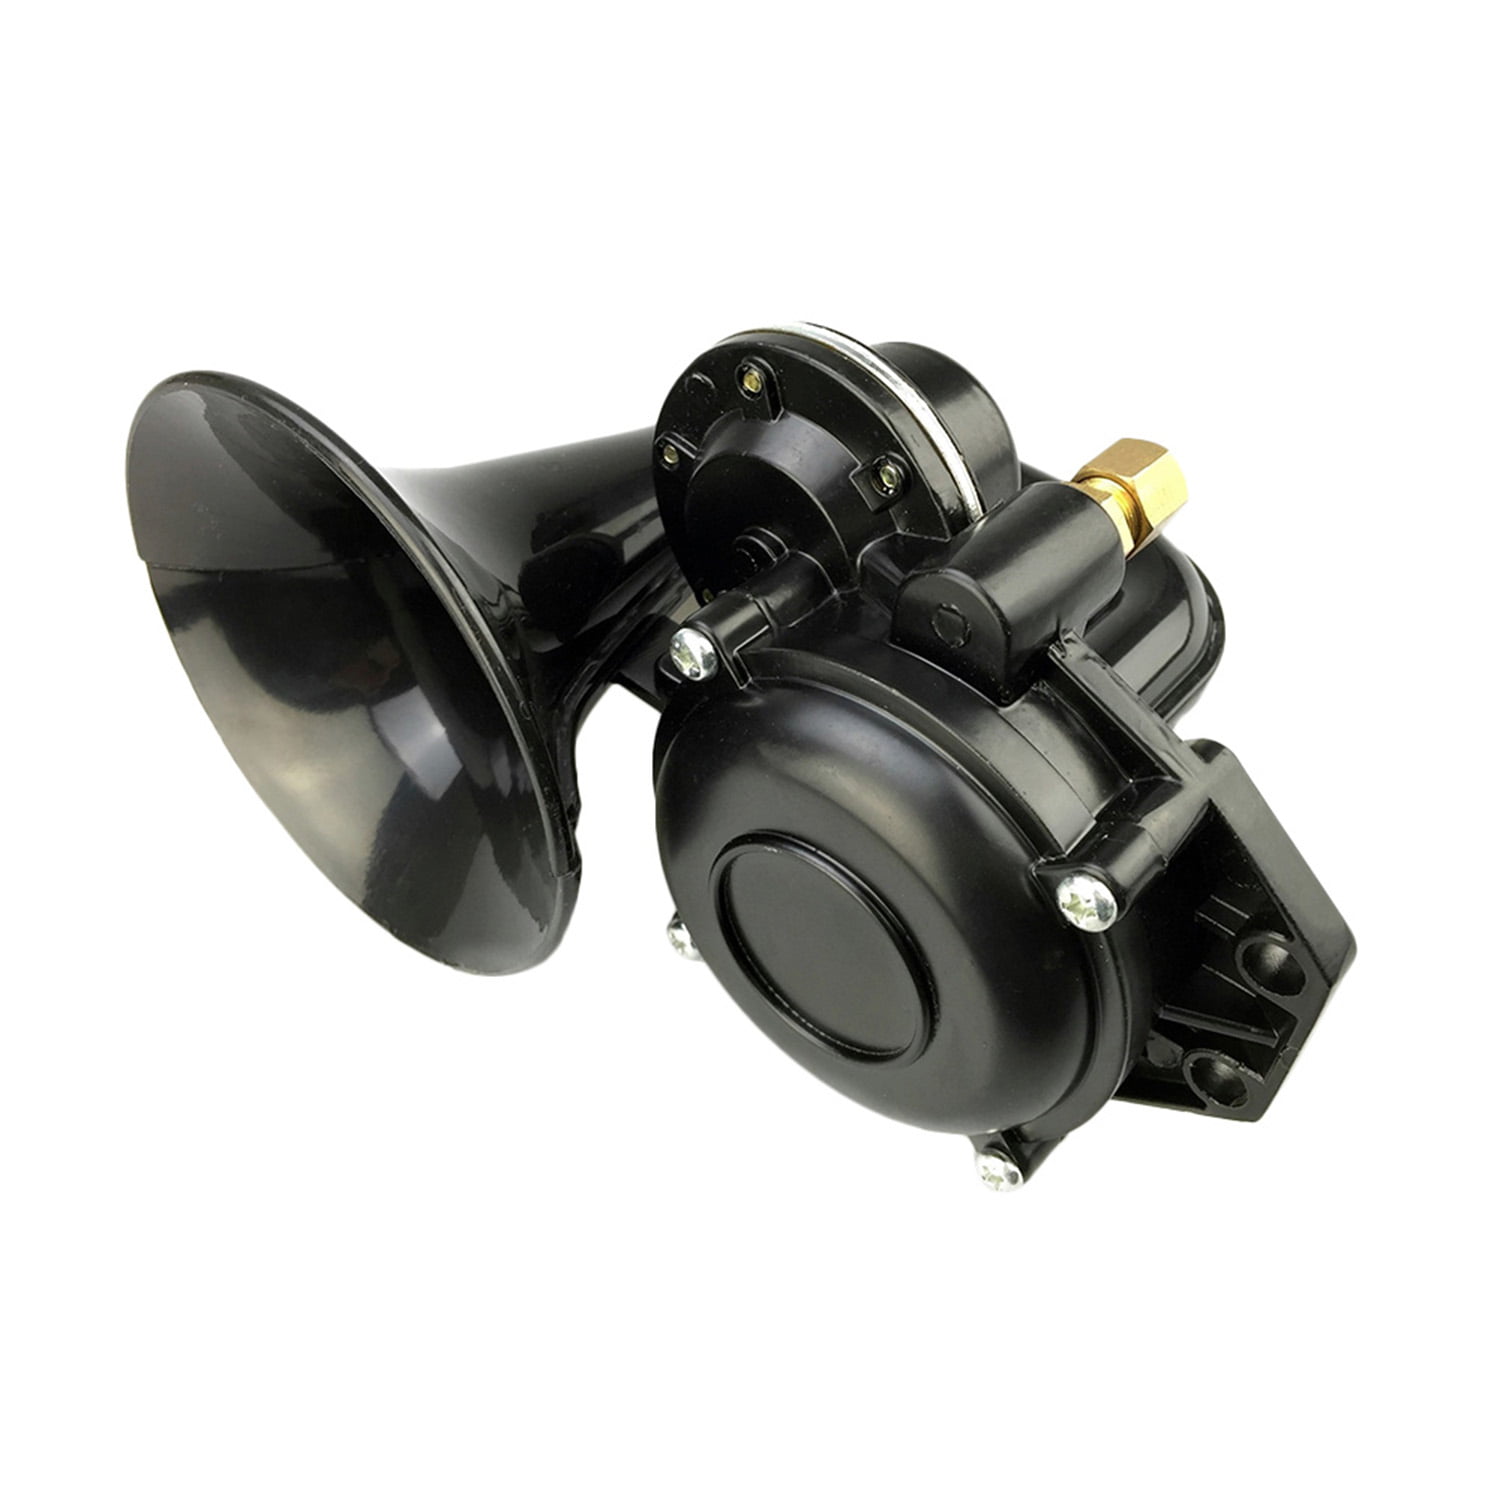 12V/24V 120DB Loud Single Trumpet Snail Air Horn Siren Waterproof Speaker Universal for Car Truck Bus Van Single Trumpet Horn 